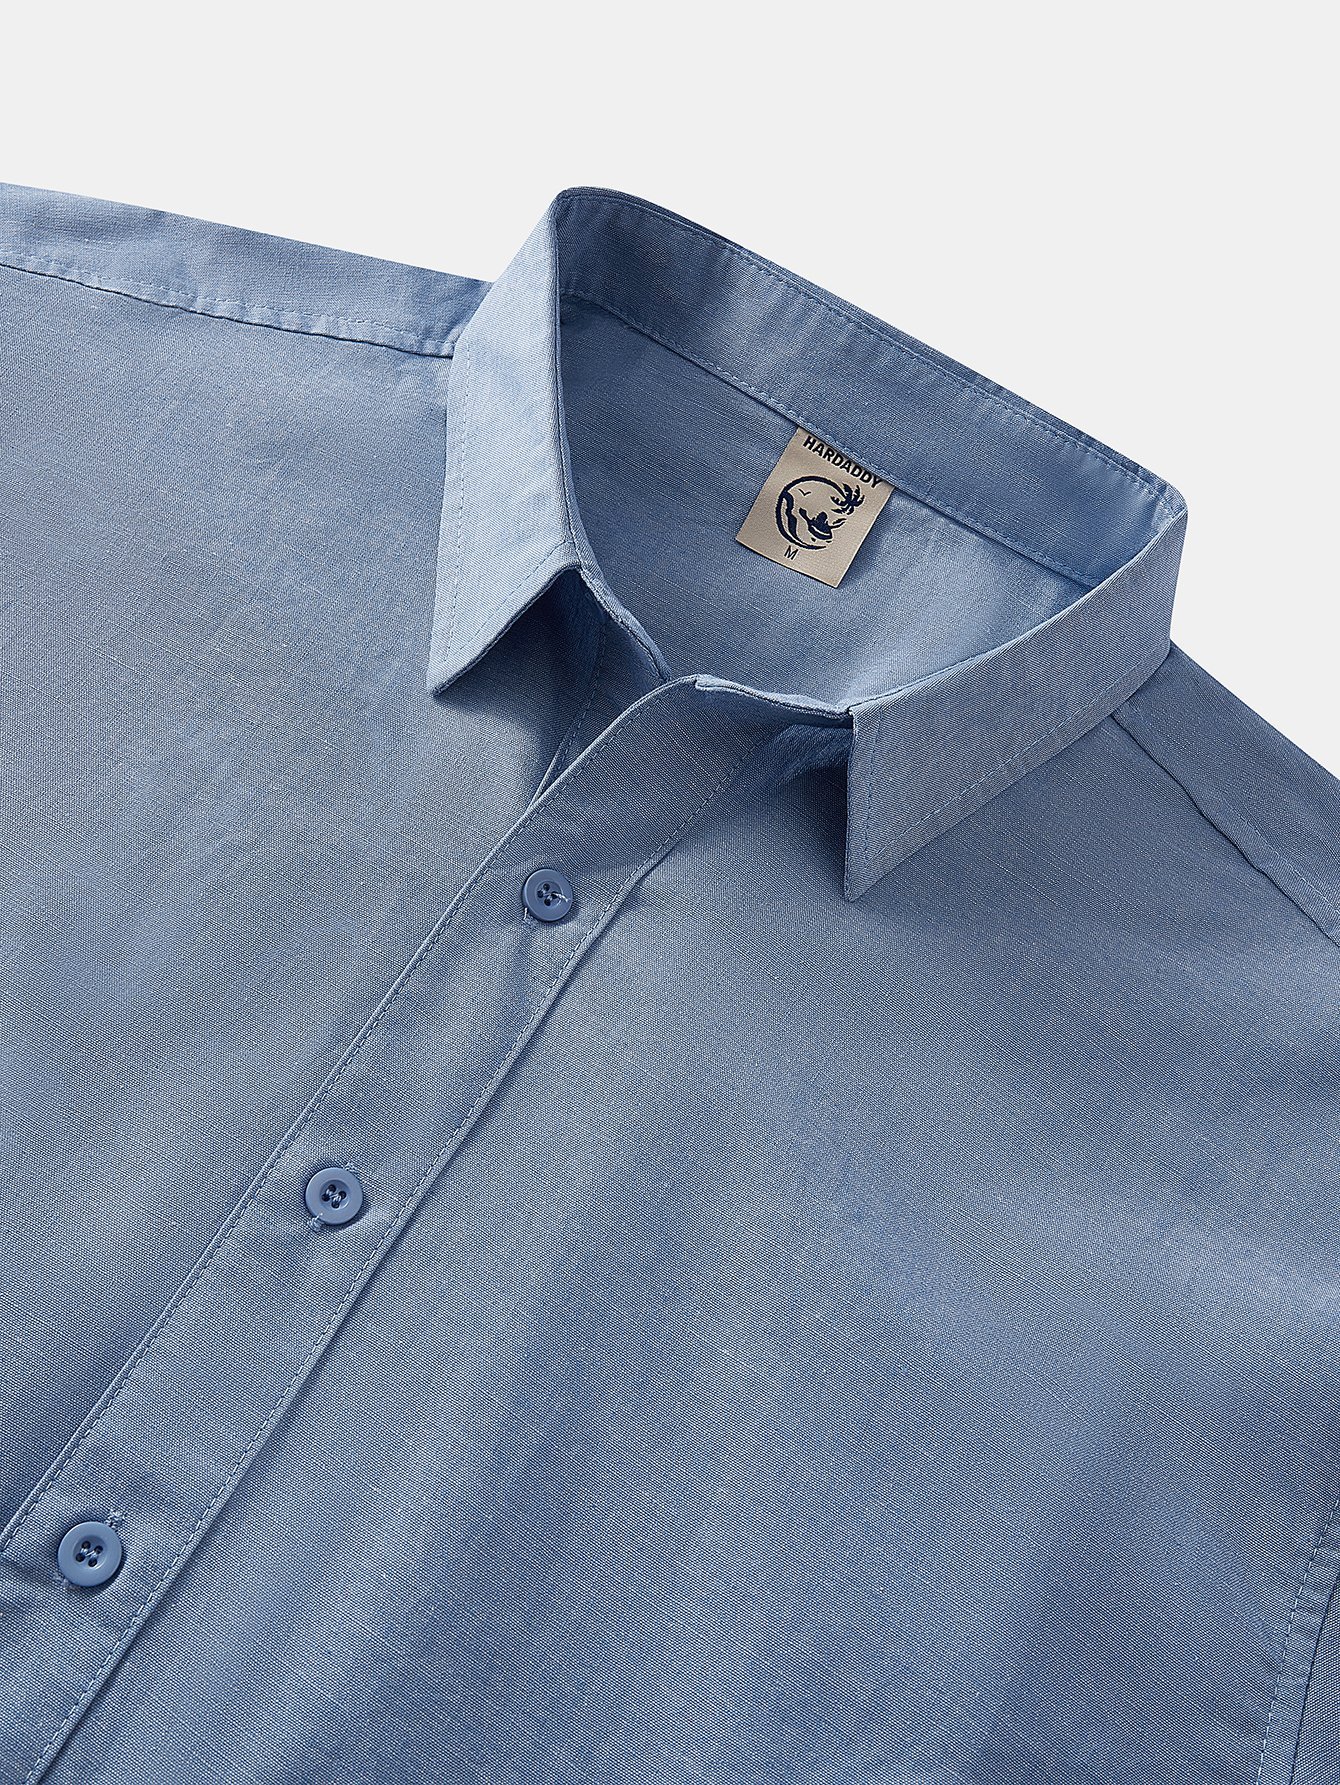 Hardaddy® Cotton Plain Short Sleeve Cigar Shirt